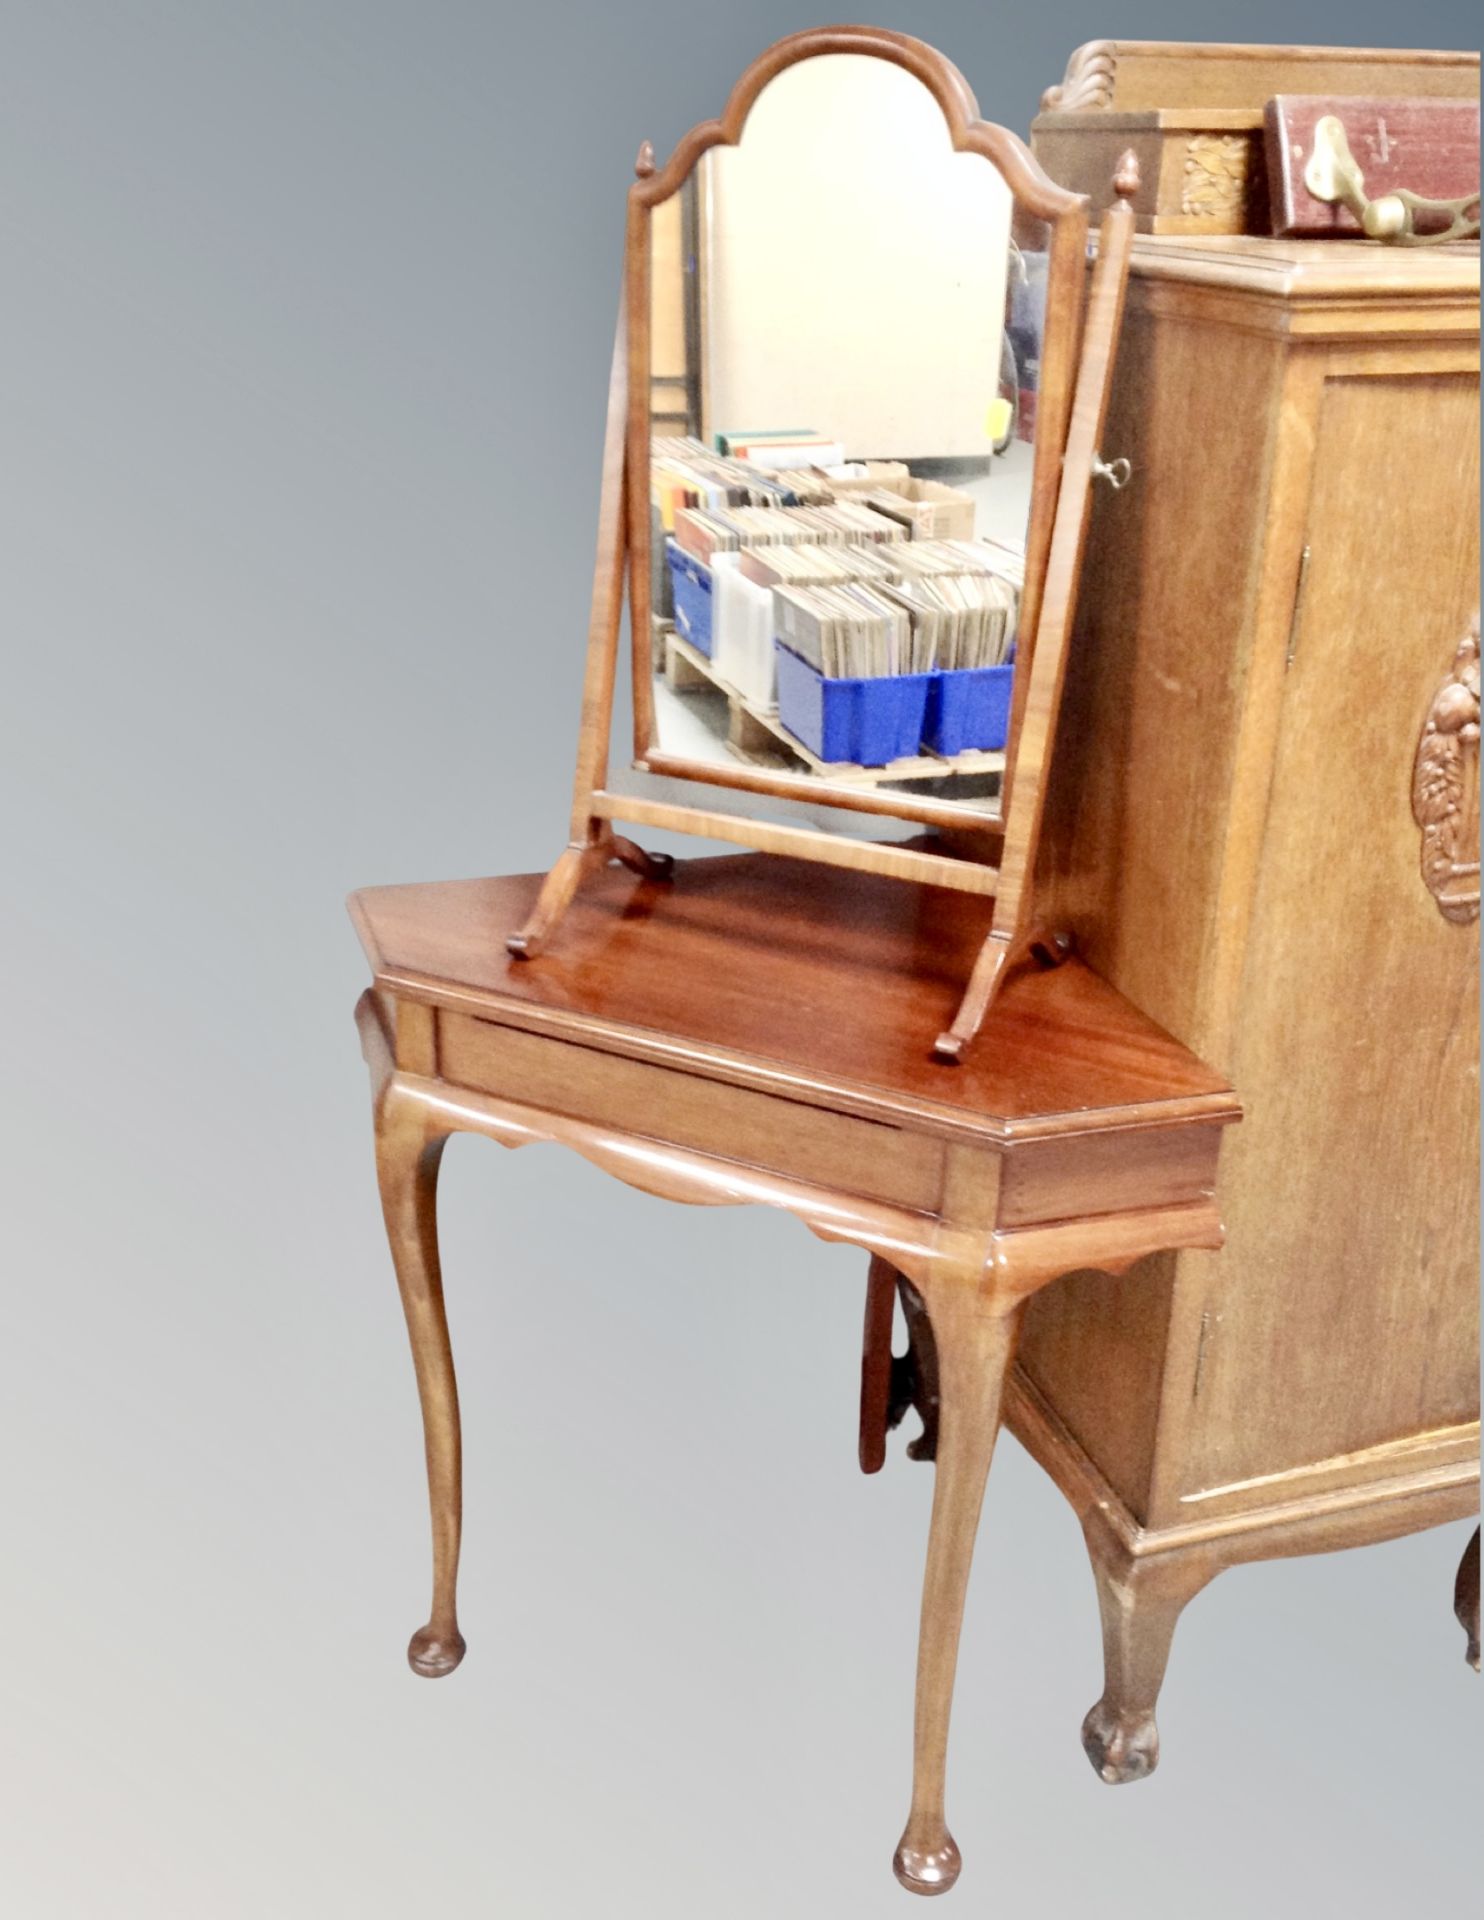 An Edwardian mahogany dressing table mirror and corner table